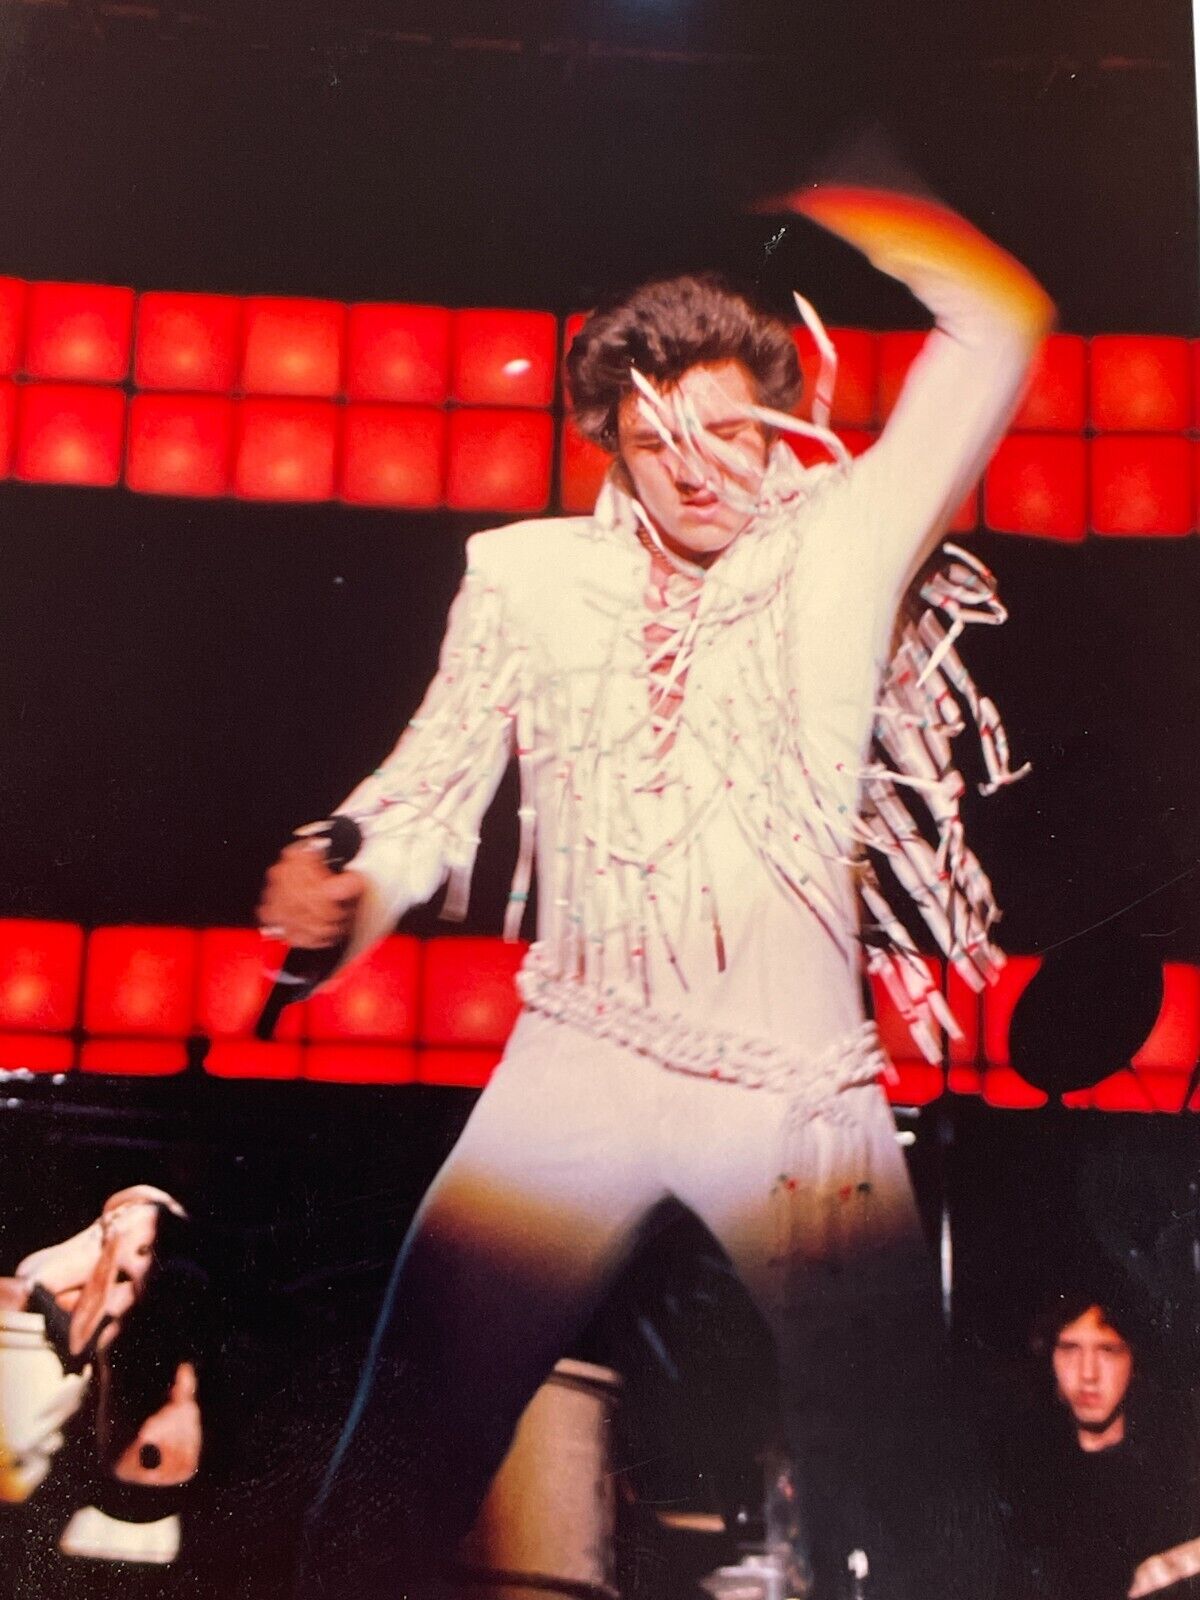 J2 Photo Handsome Elvis Impersonator Lookalike 1980s Singing Performing On Stage